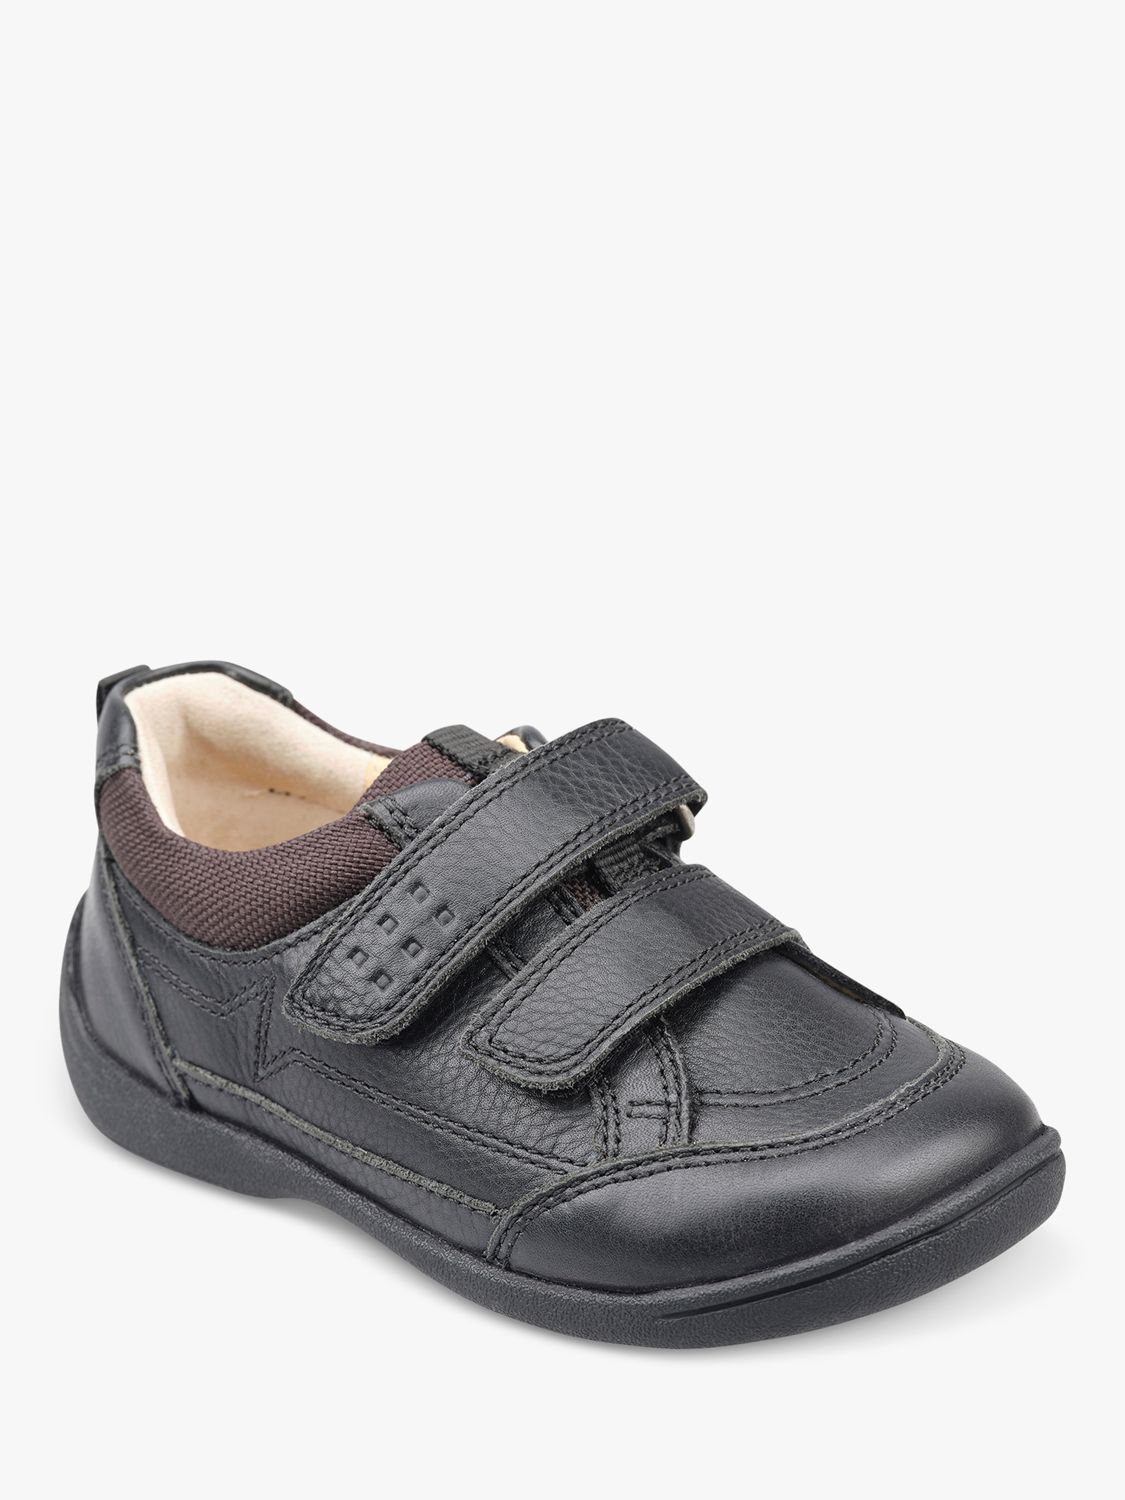 Start-Rite Kids' Zigzag Leather School Shoes, Black, 7G Jnr